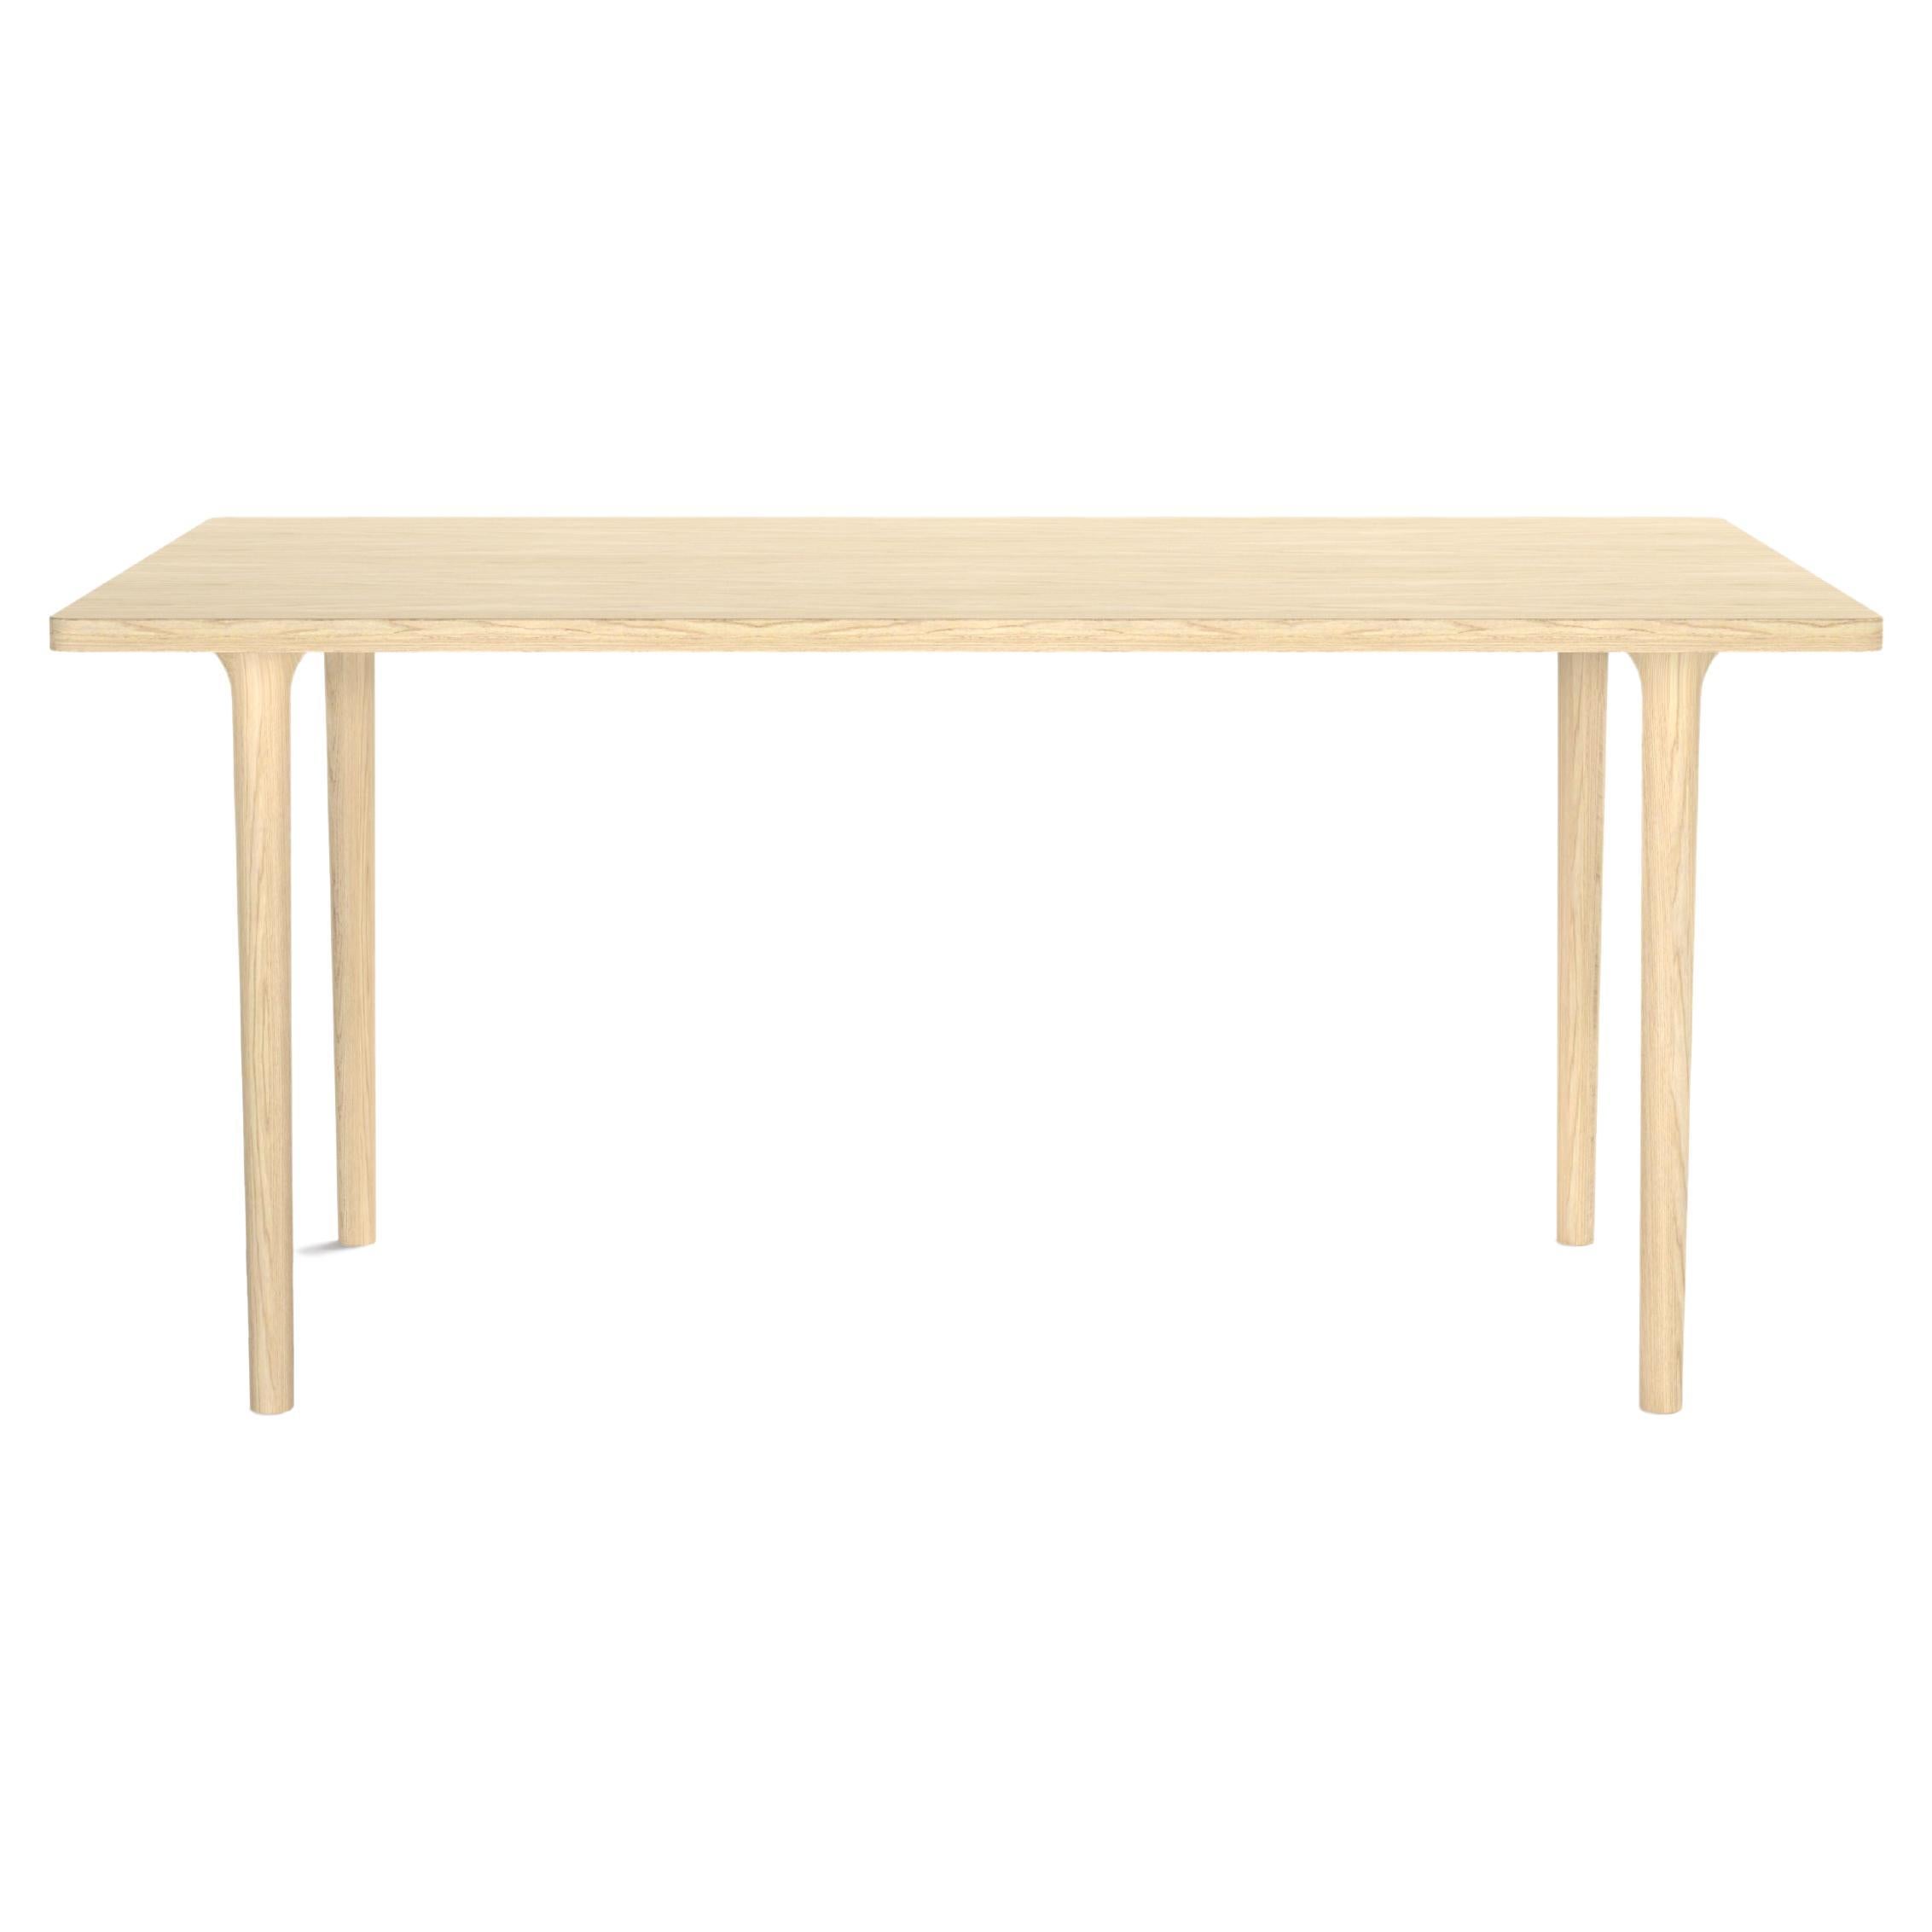 Minimalist Modern Table in Ash Wood Rectangular